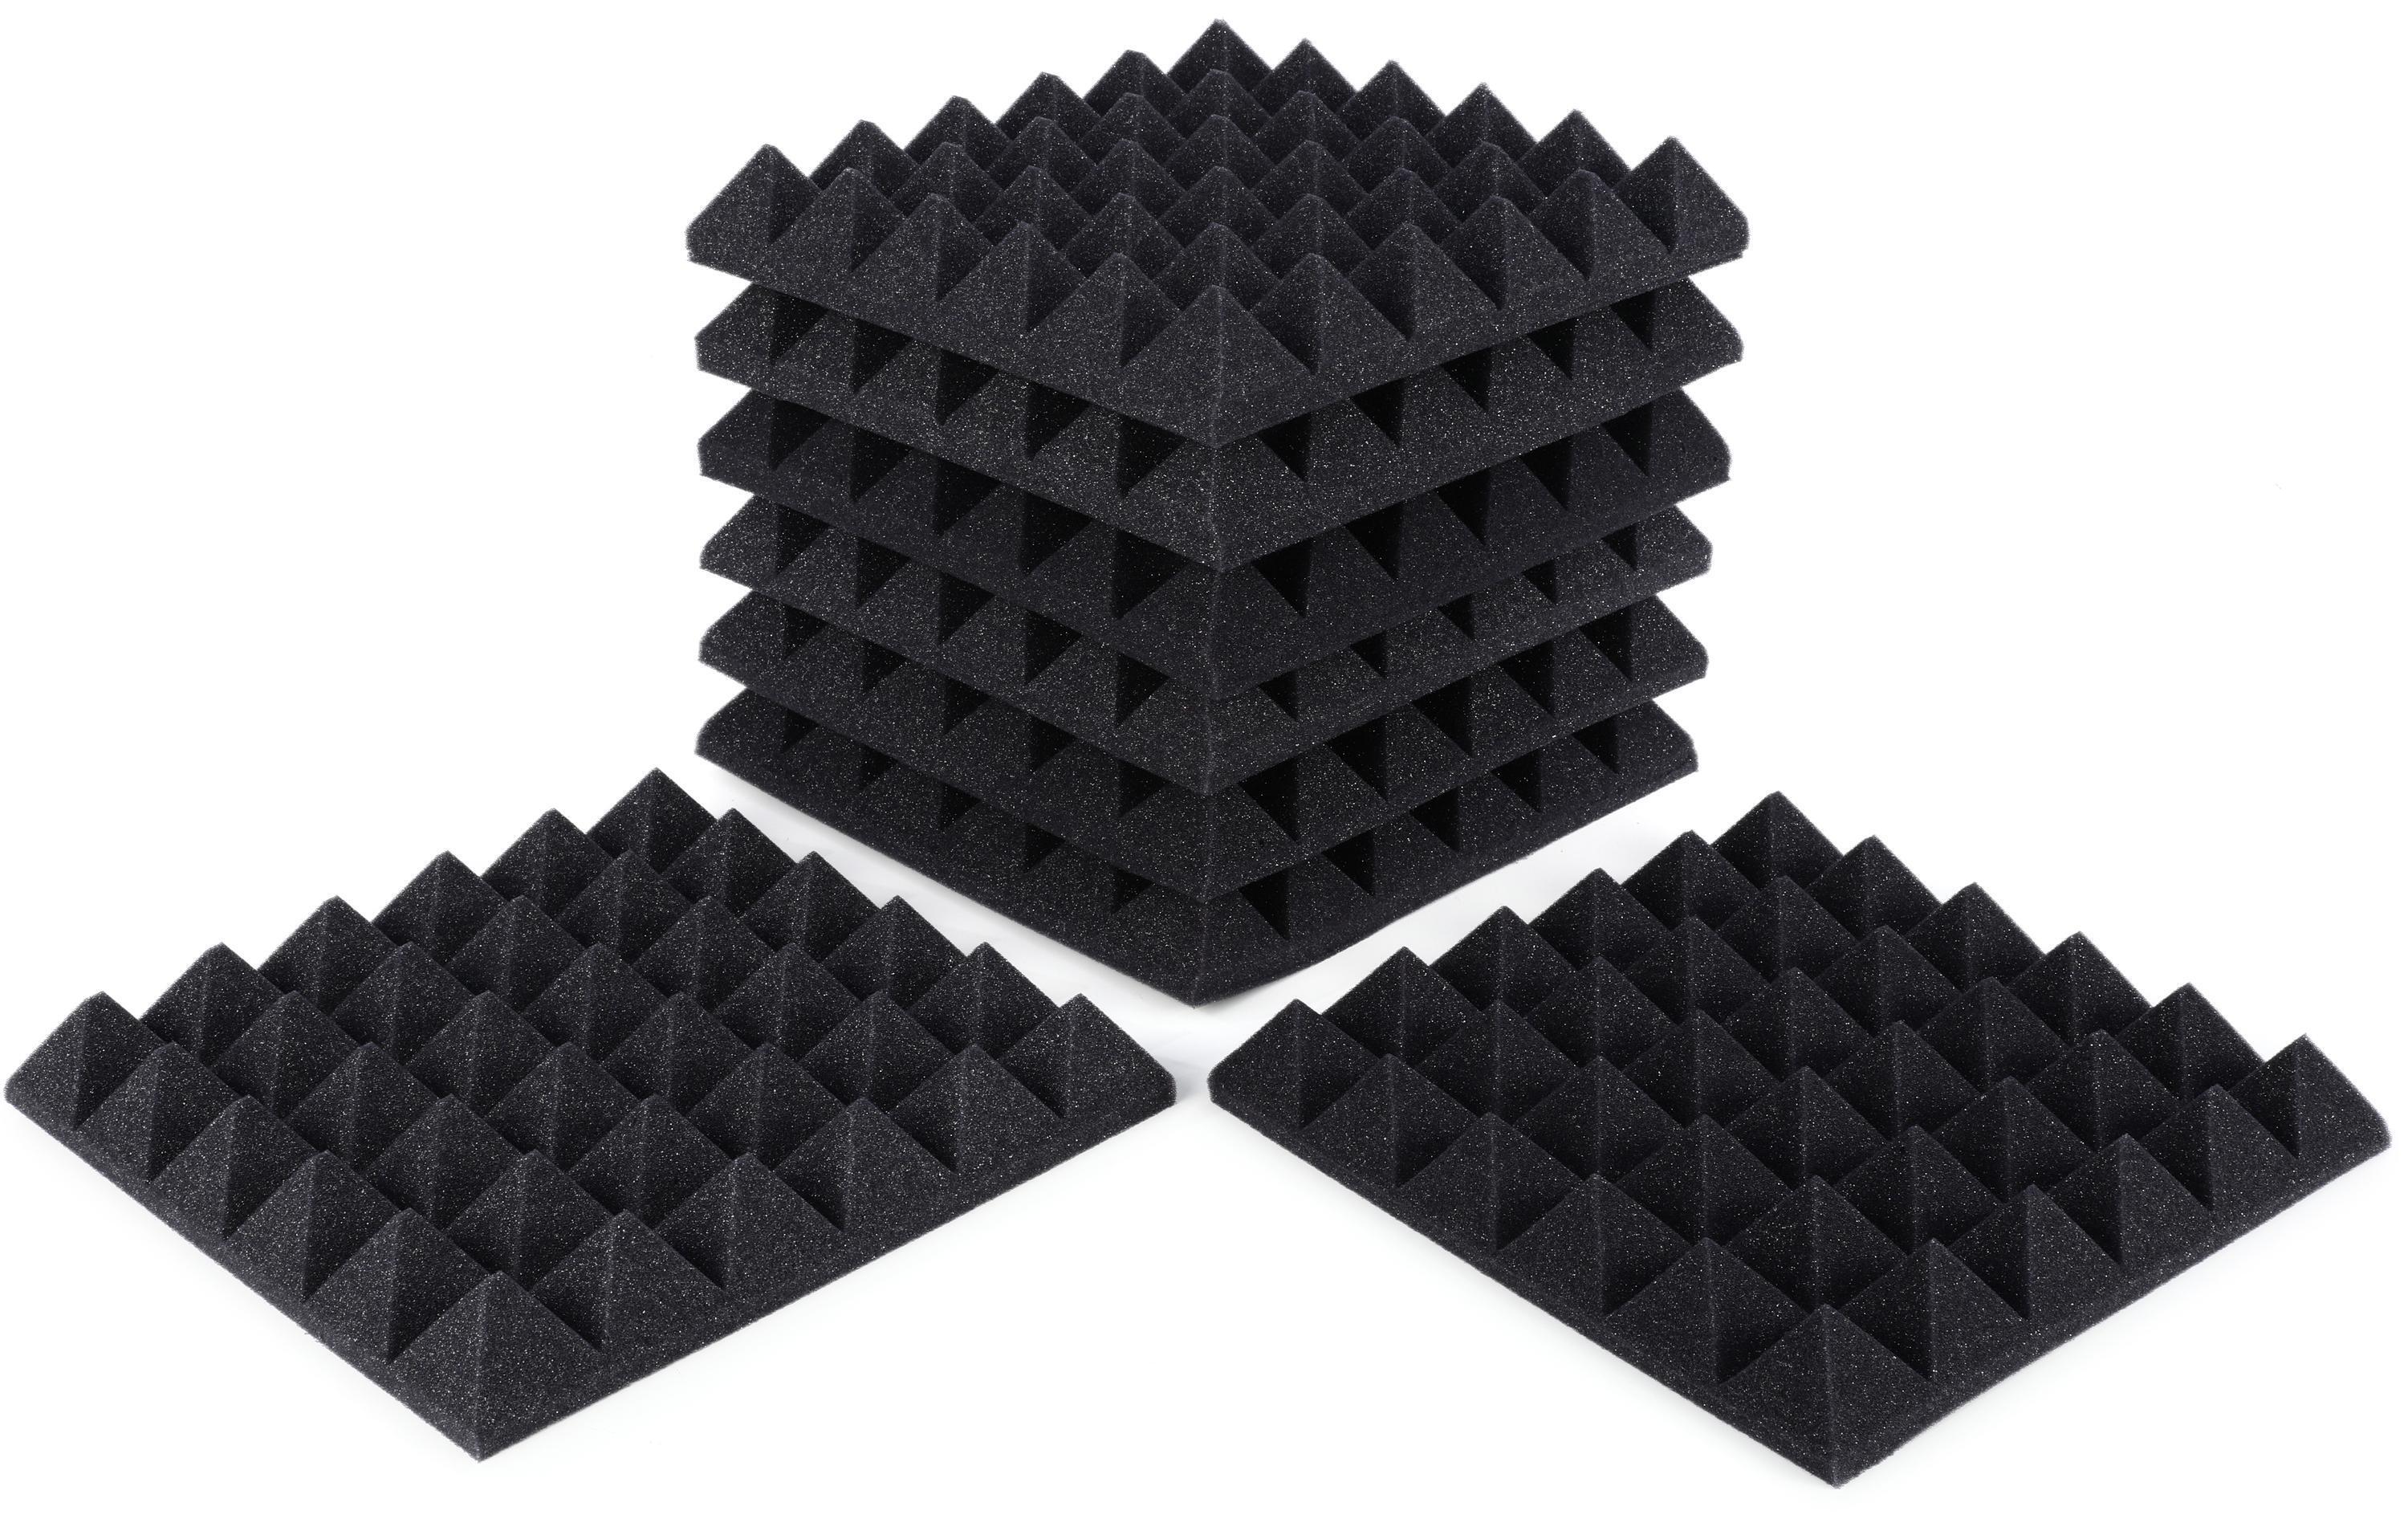 Bundled Item: Gator Acoustic Pyramid Panels - 1x1 foot 8-pack - Charcoal